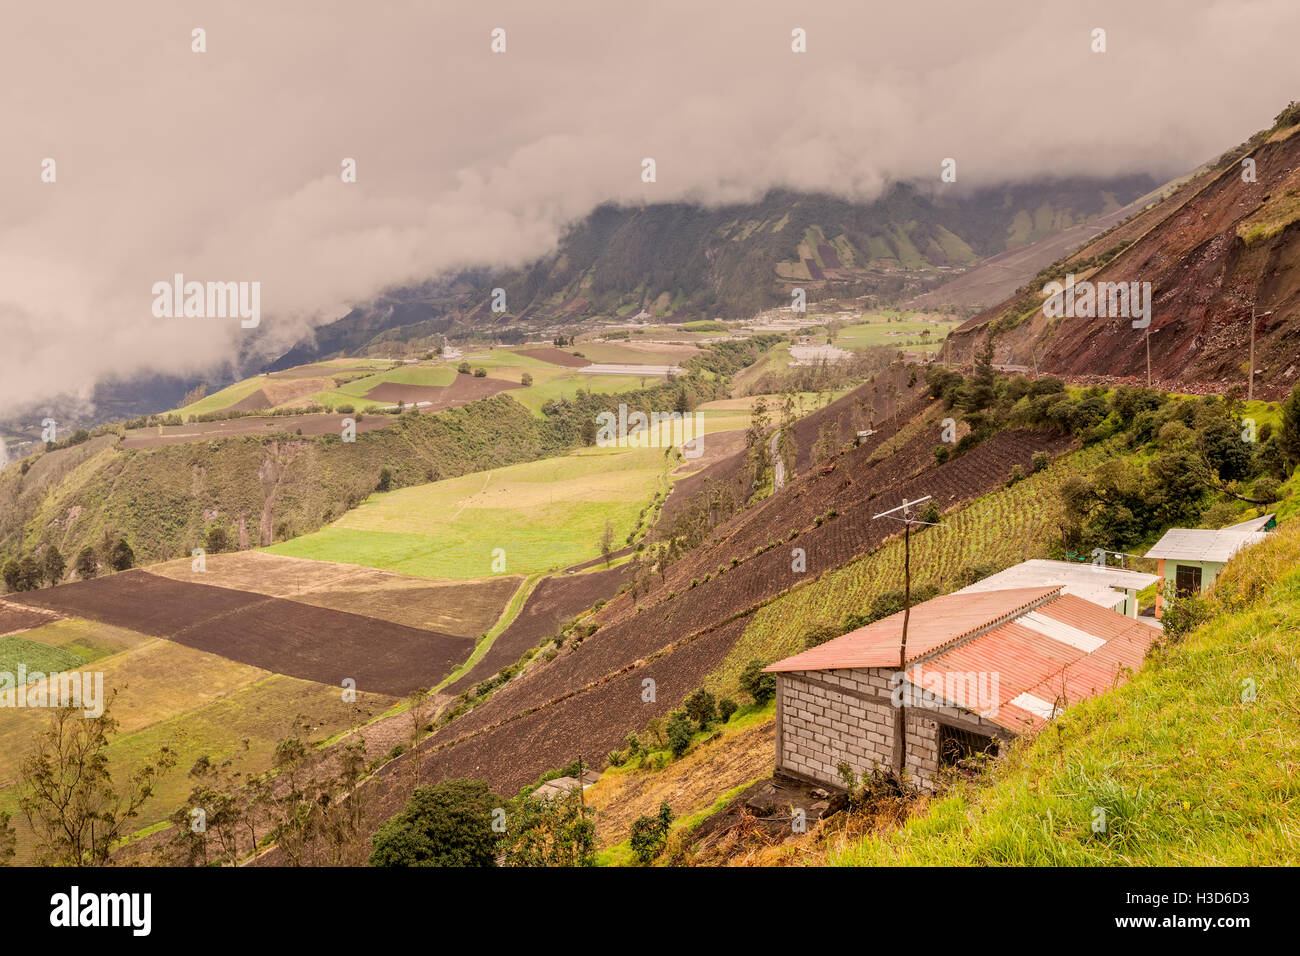 Landwirte In den Gipfeln der Anden Kordilleren, Ecuador, Südamerika Stockfoto